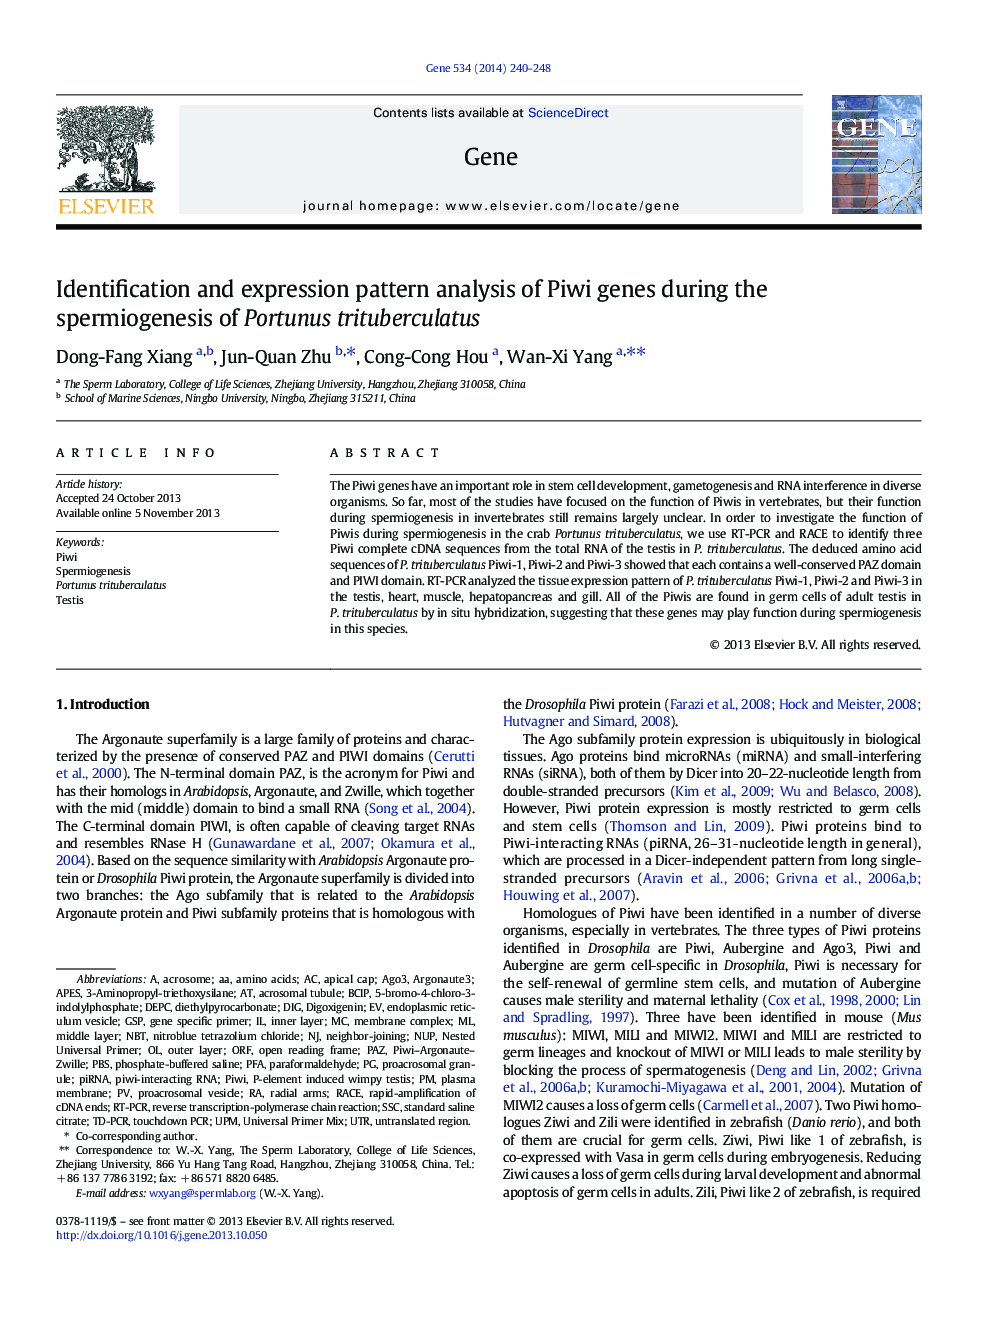 Identification and expression pattern analysis of Piwi genes during the spermiogenesis of Portunus trituberculatus